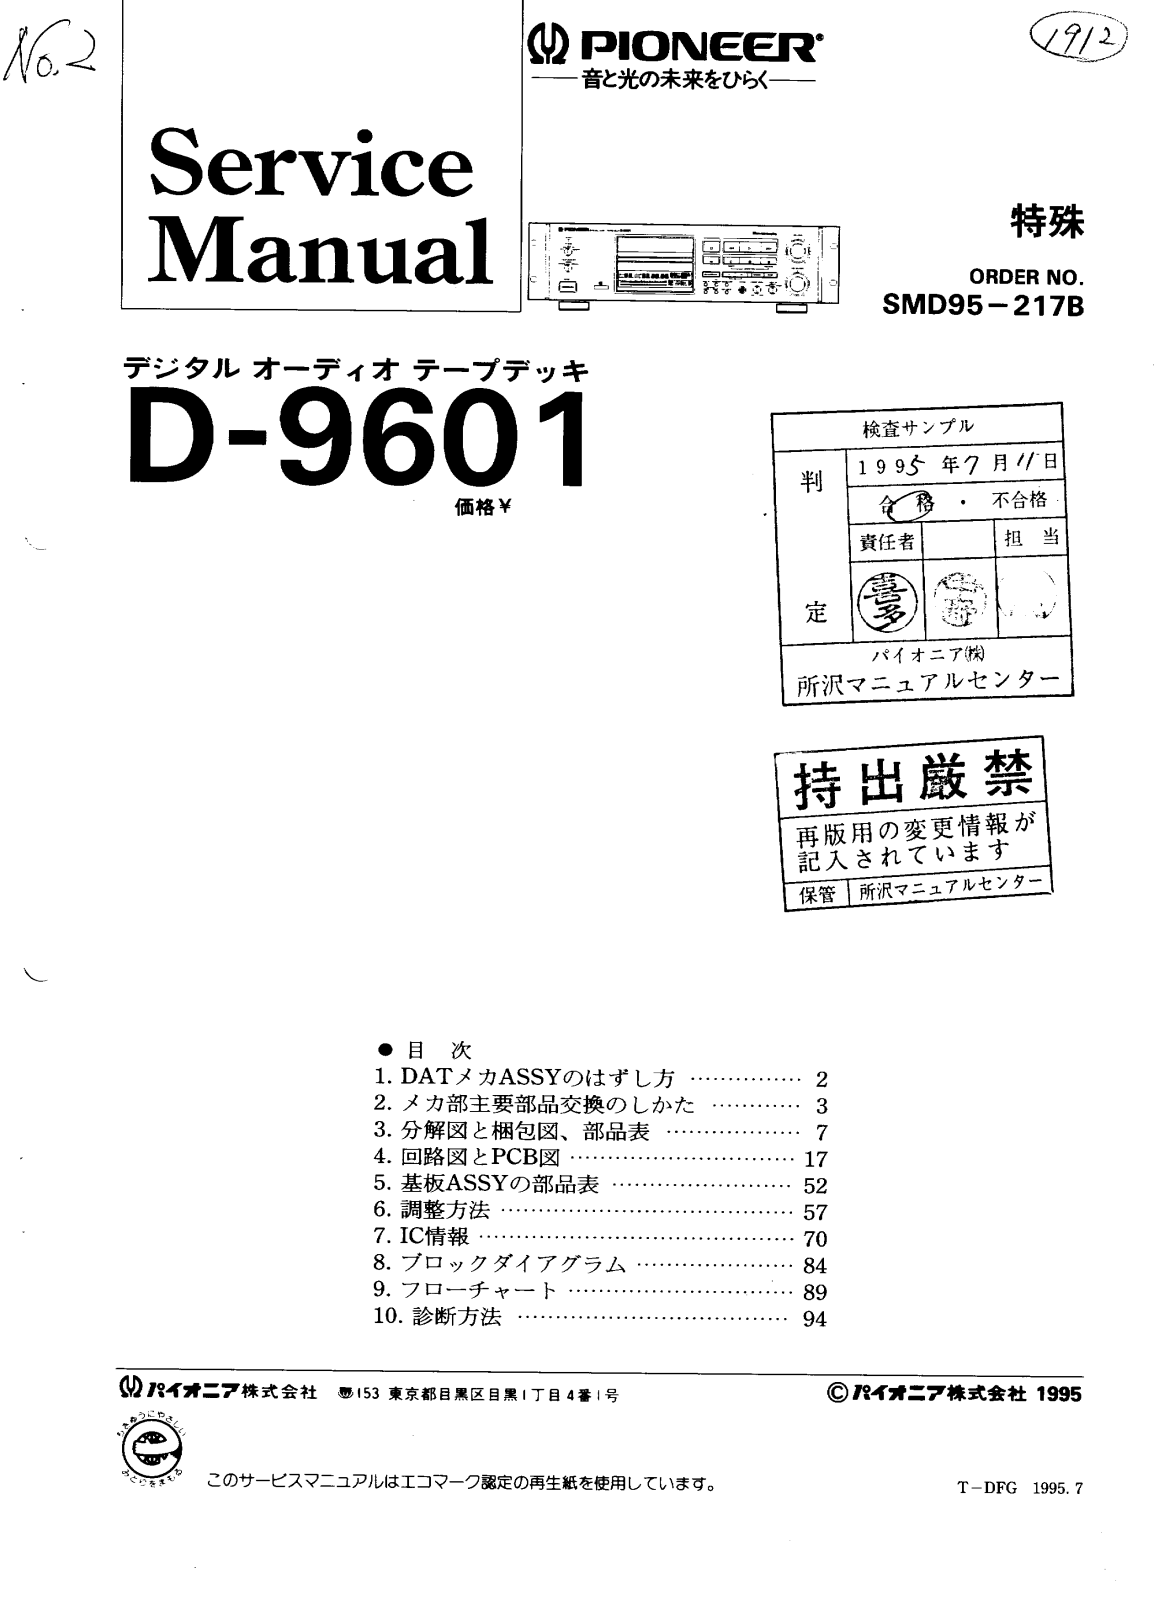 Pioneer D-9601 Service manual